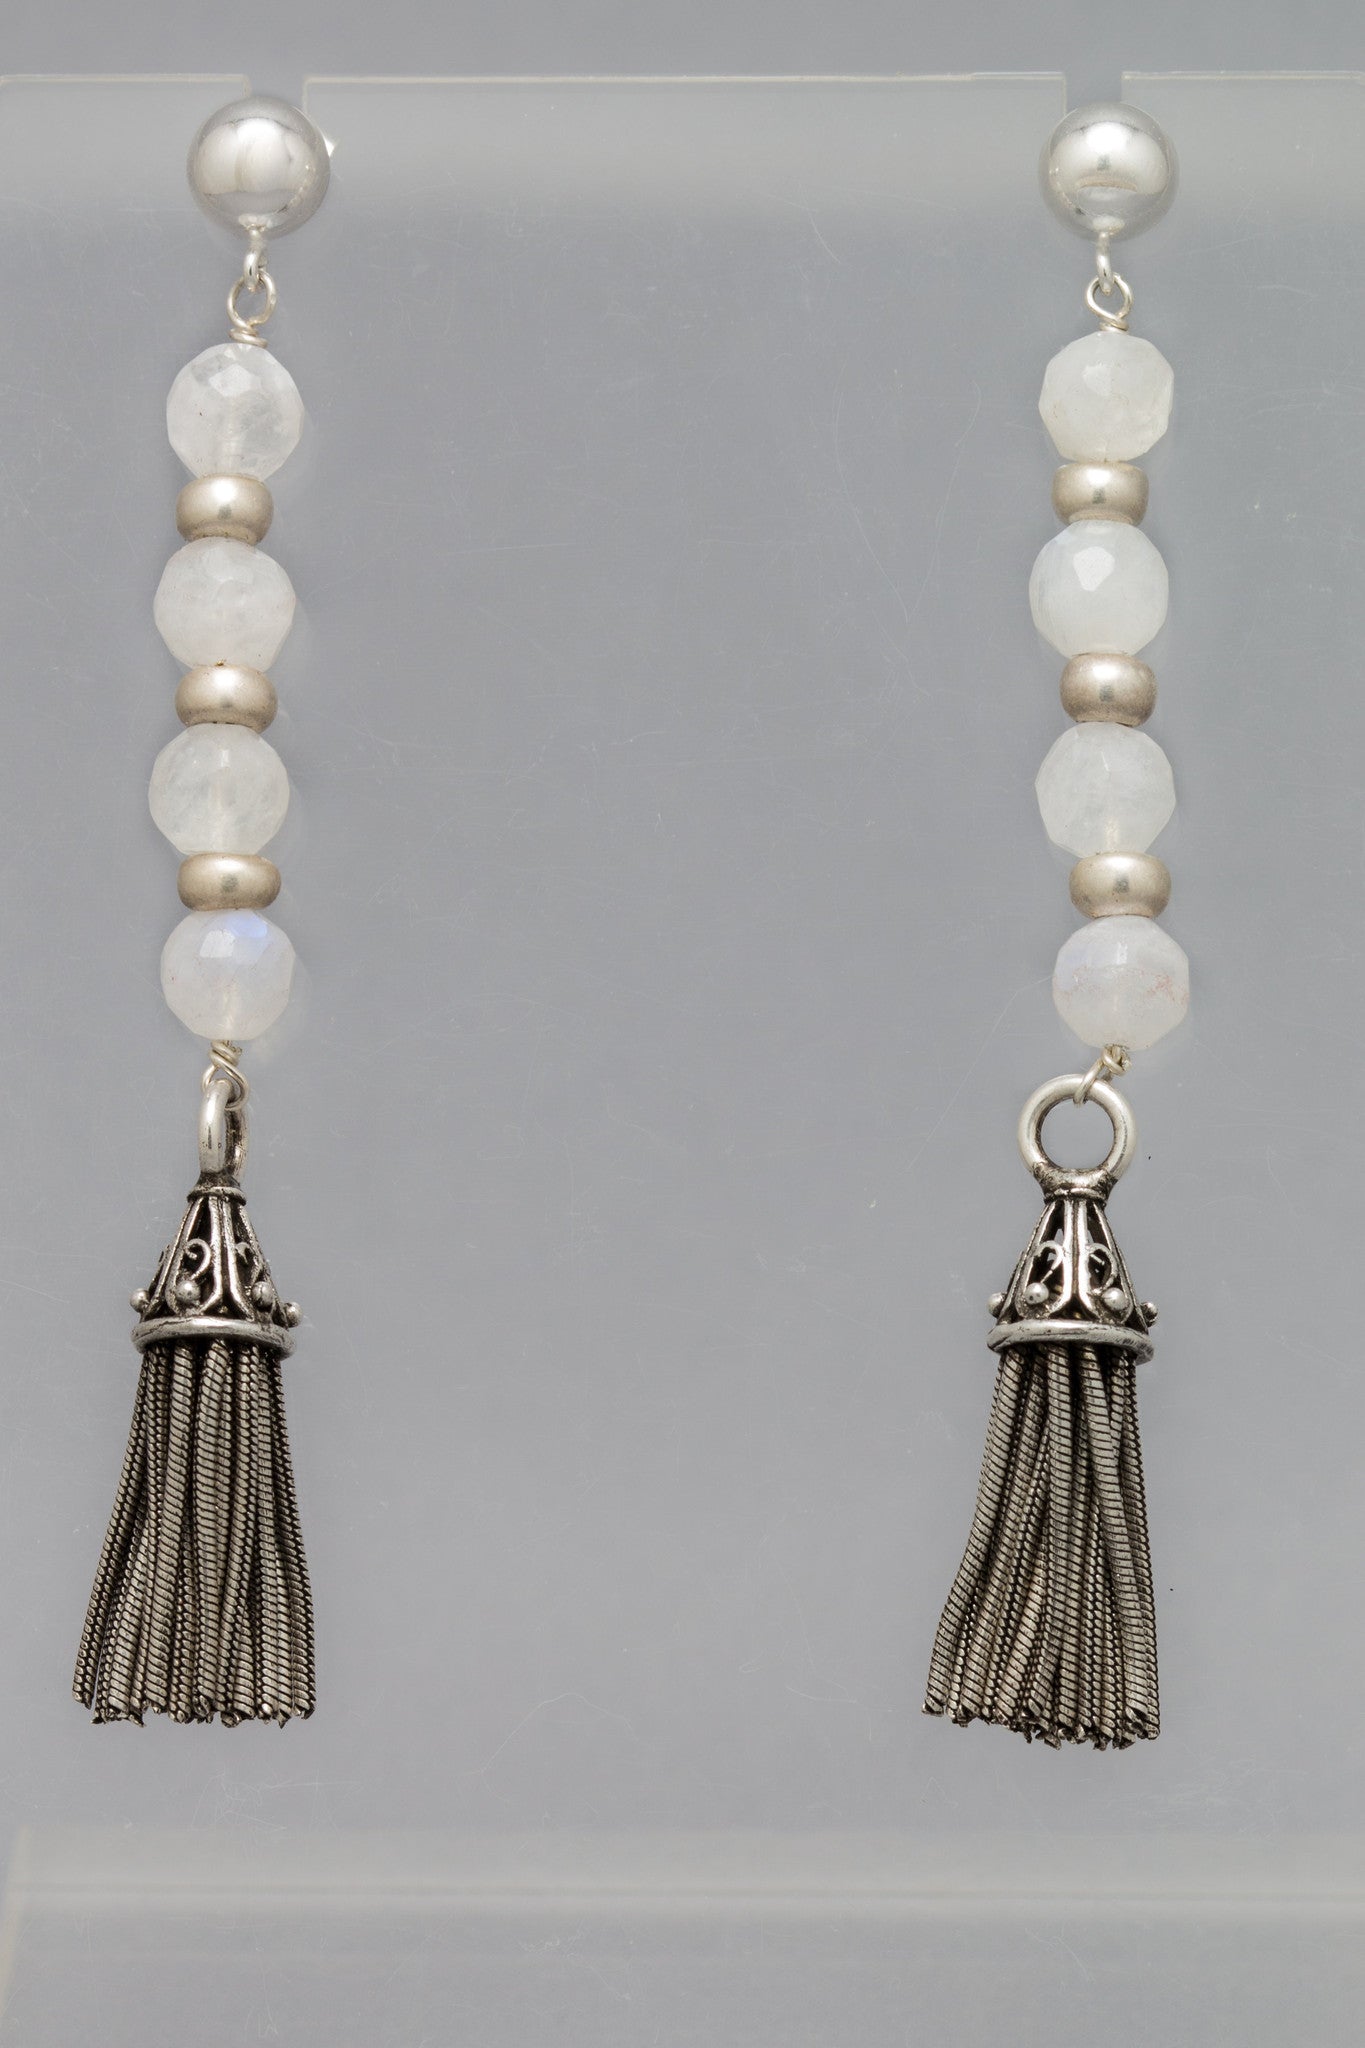 Moonstone Earrings with Silver Tassels